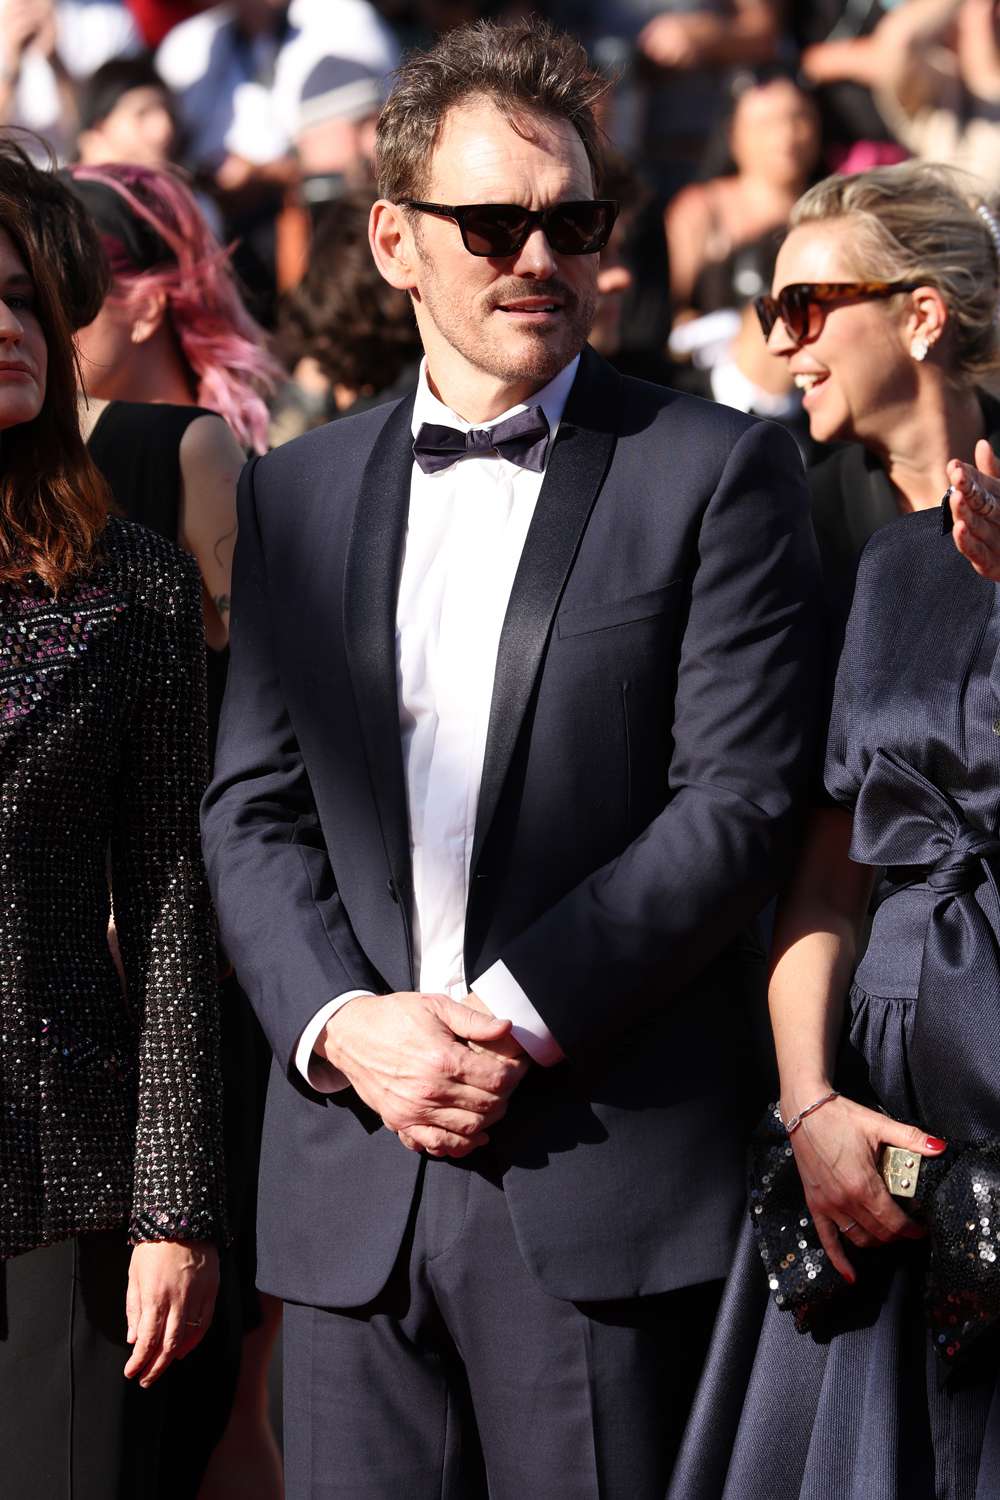 Matt Dillon attends the "Marcello Mio" Red Carpet at the 77th annual Cannes Film Festival at Palais des Festivals on 